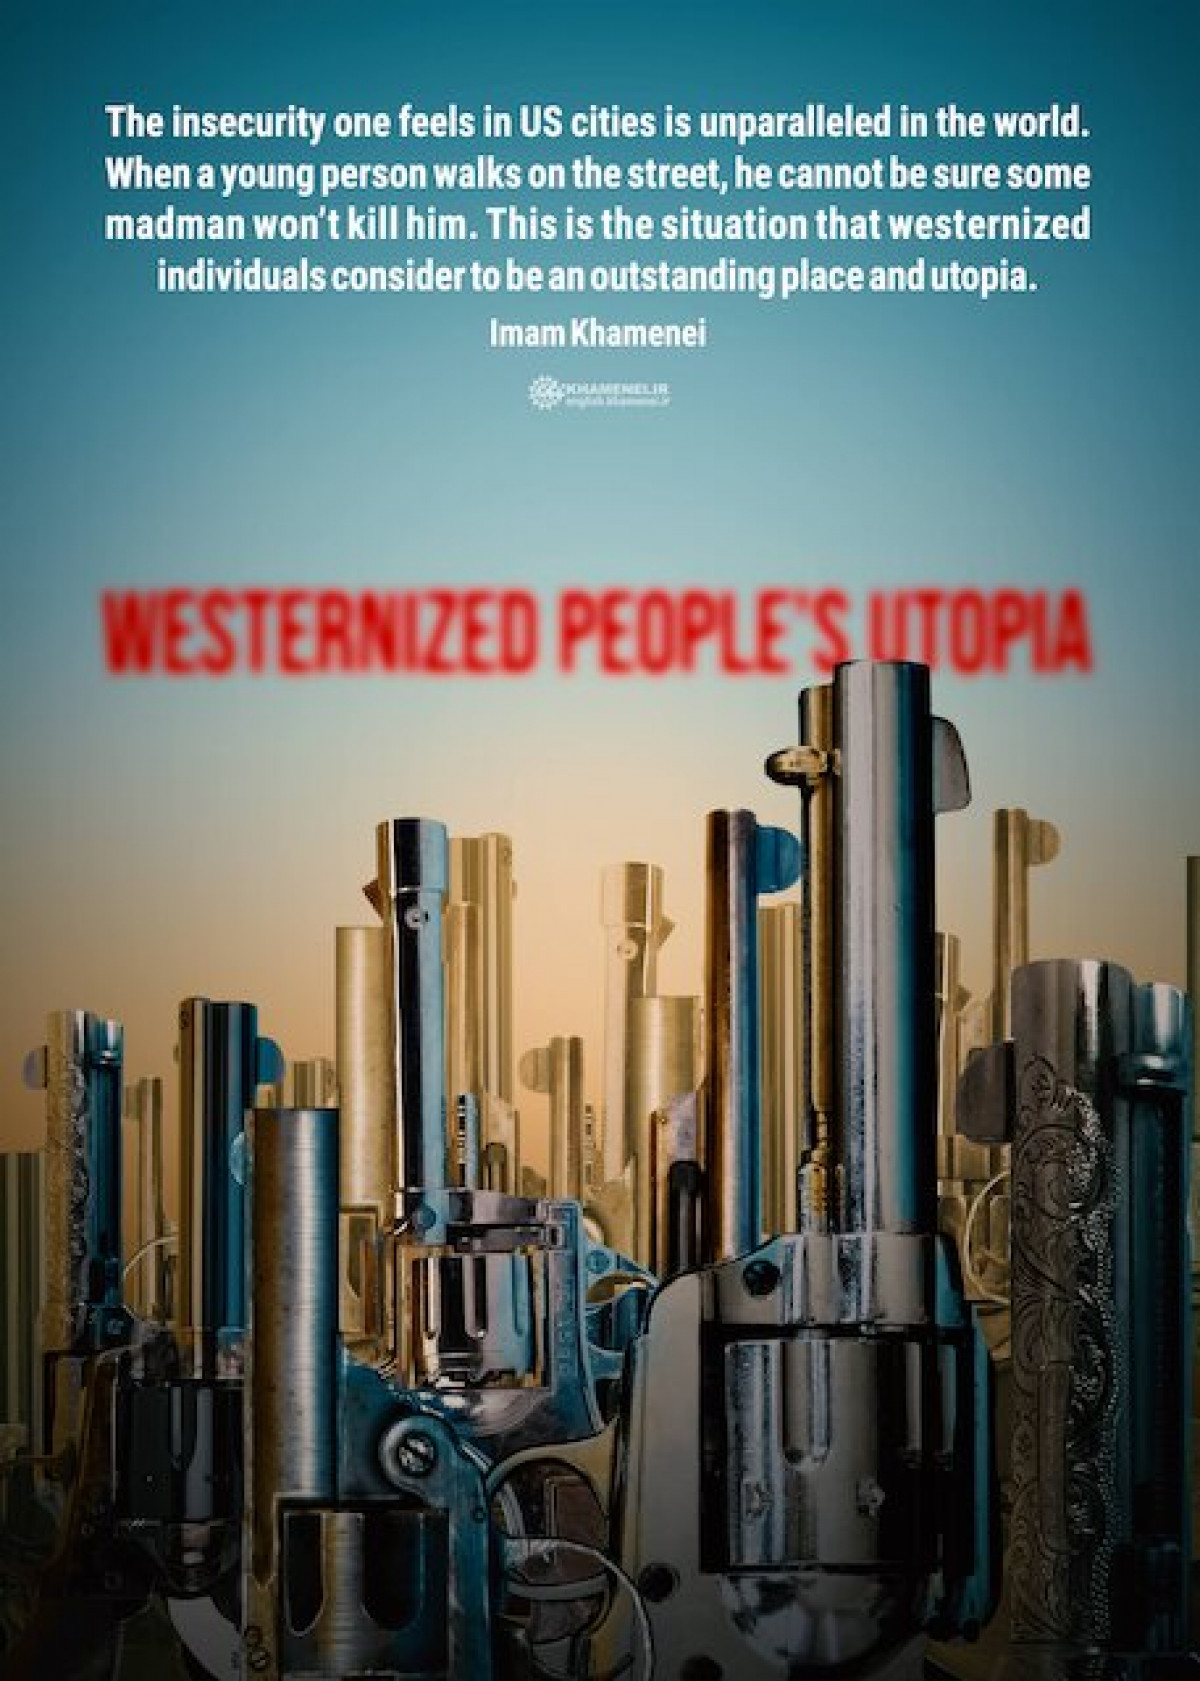 Westernized people’s utopia